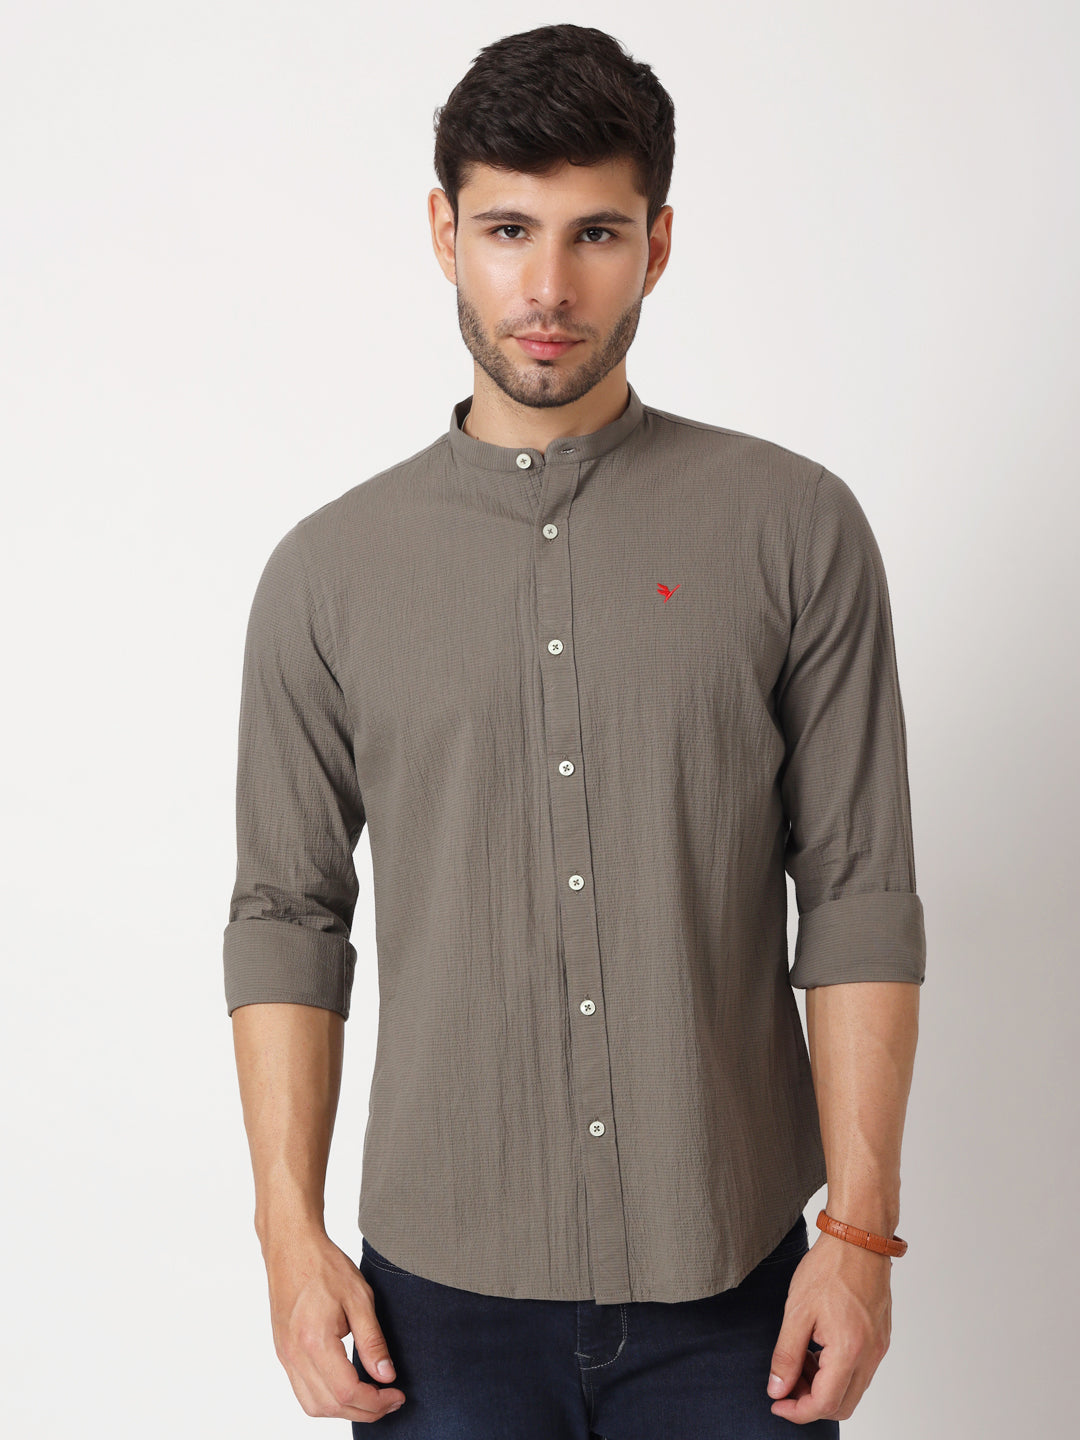 Amswan Premium Men's Grey Crinkle Cotton Shirt - Mandarin Collar, Long Sleeves